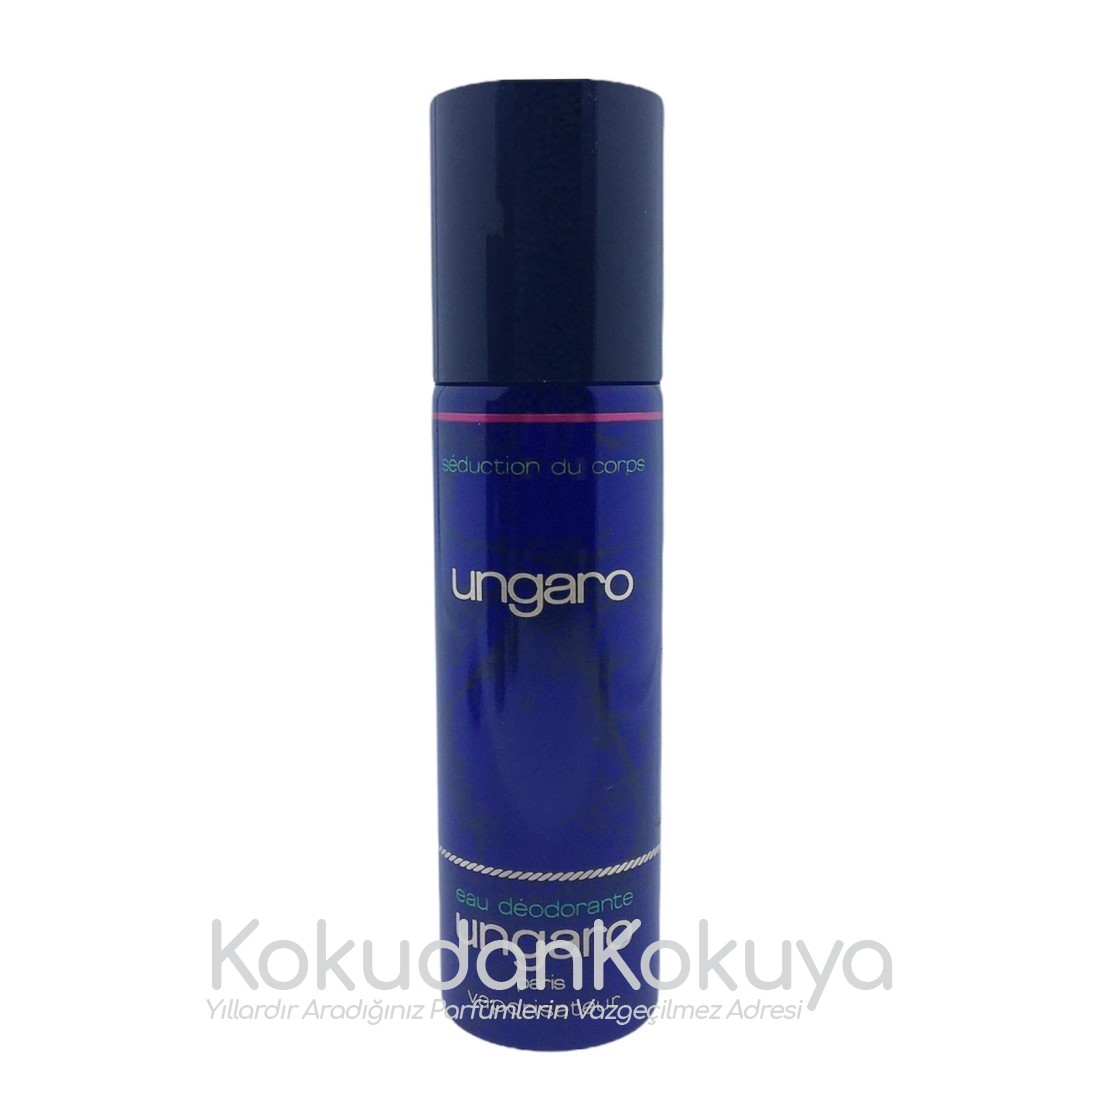 EMANUEL UNGARO Ungaro Women (Vintage) Deodorant Kadın 100ml Deodorant Spray (Metal) 